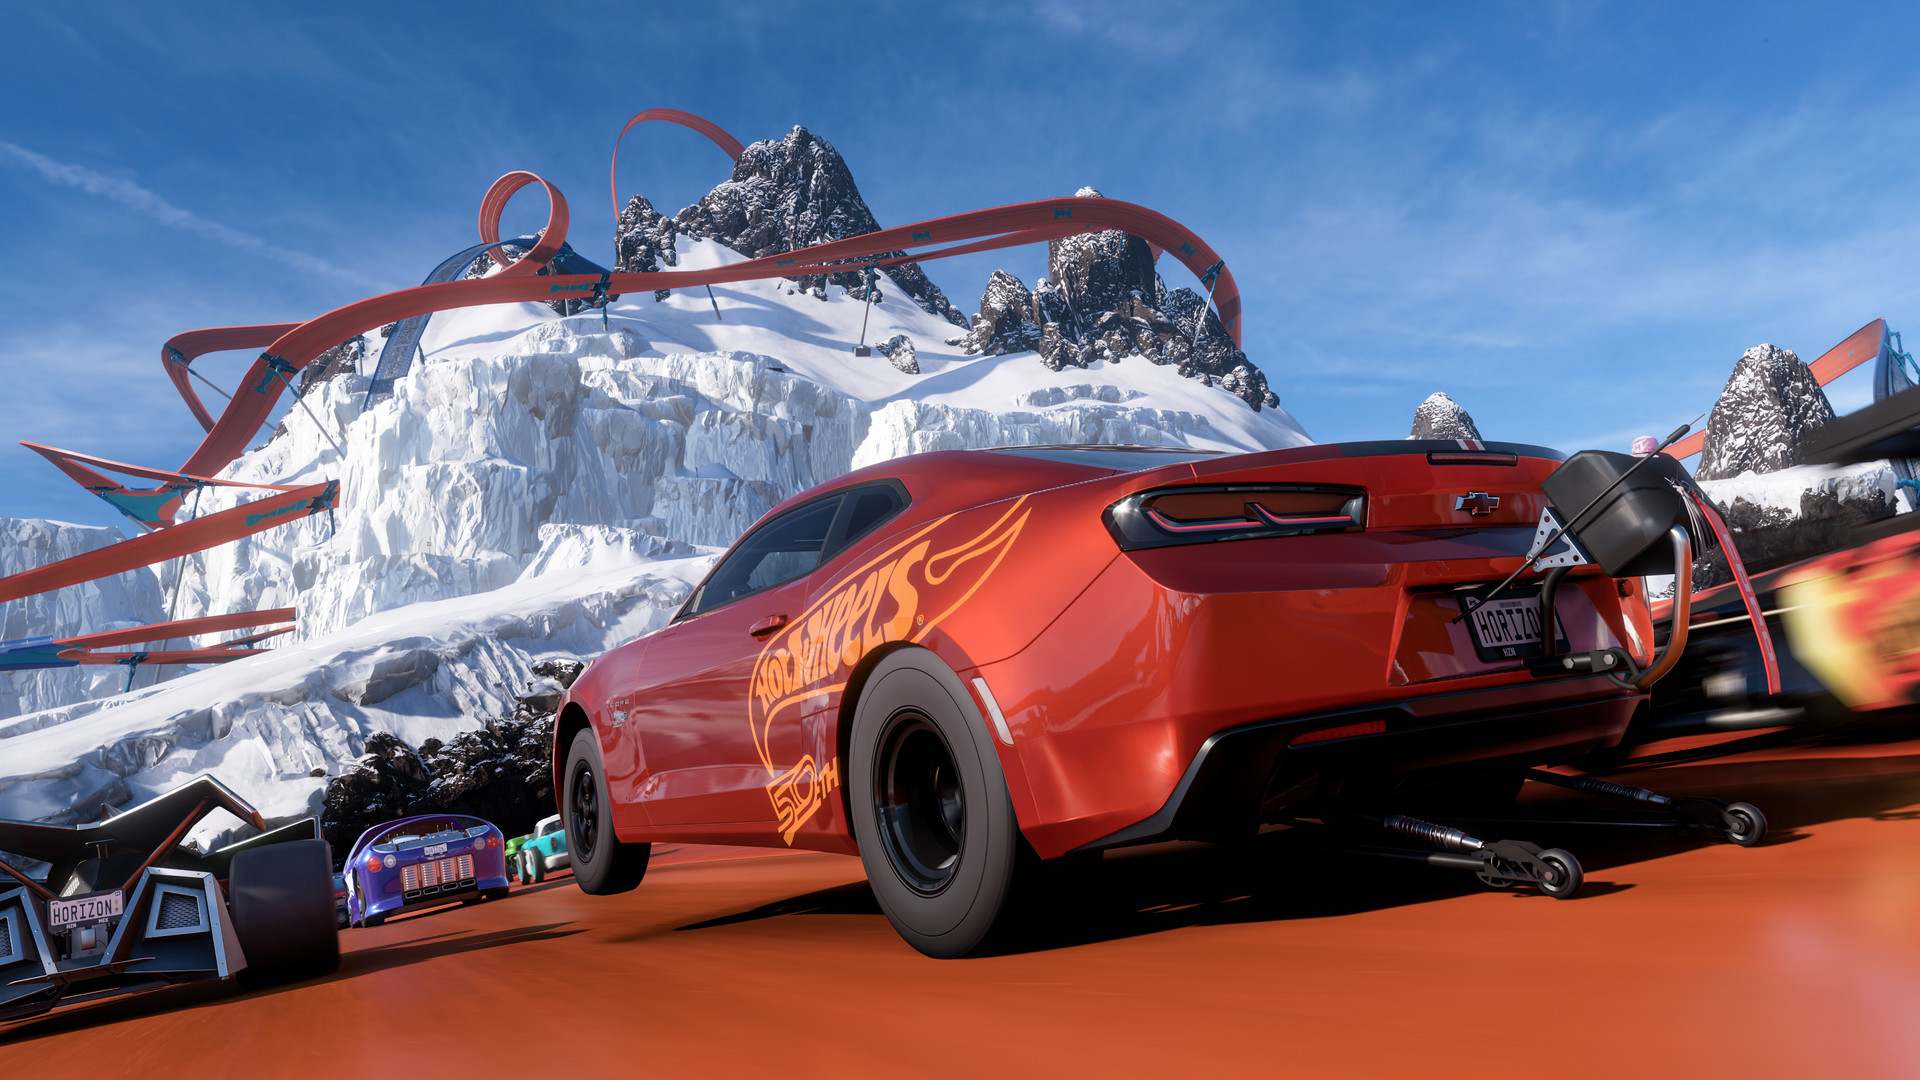 Скриншот ✅ Forza Horizon 5: Premium XBOX ONE X|S PC Ключ 🔑